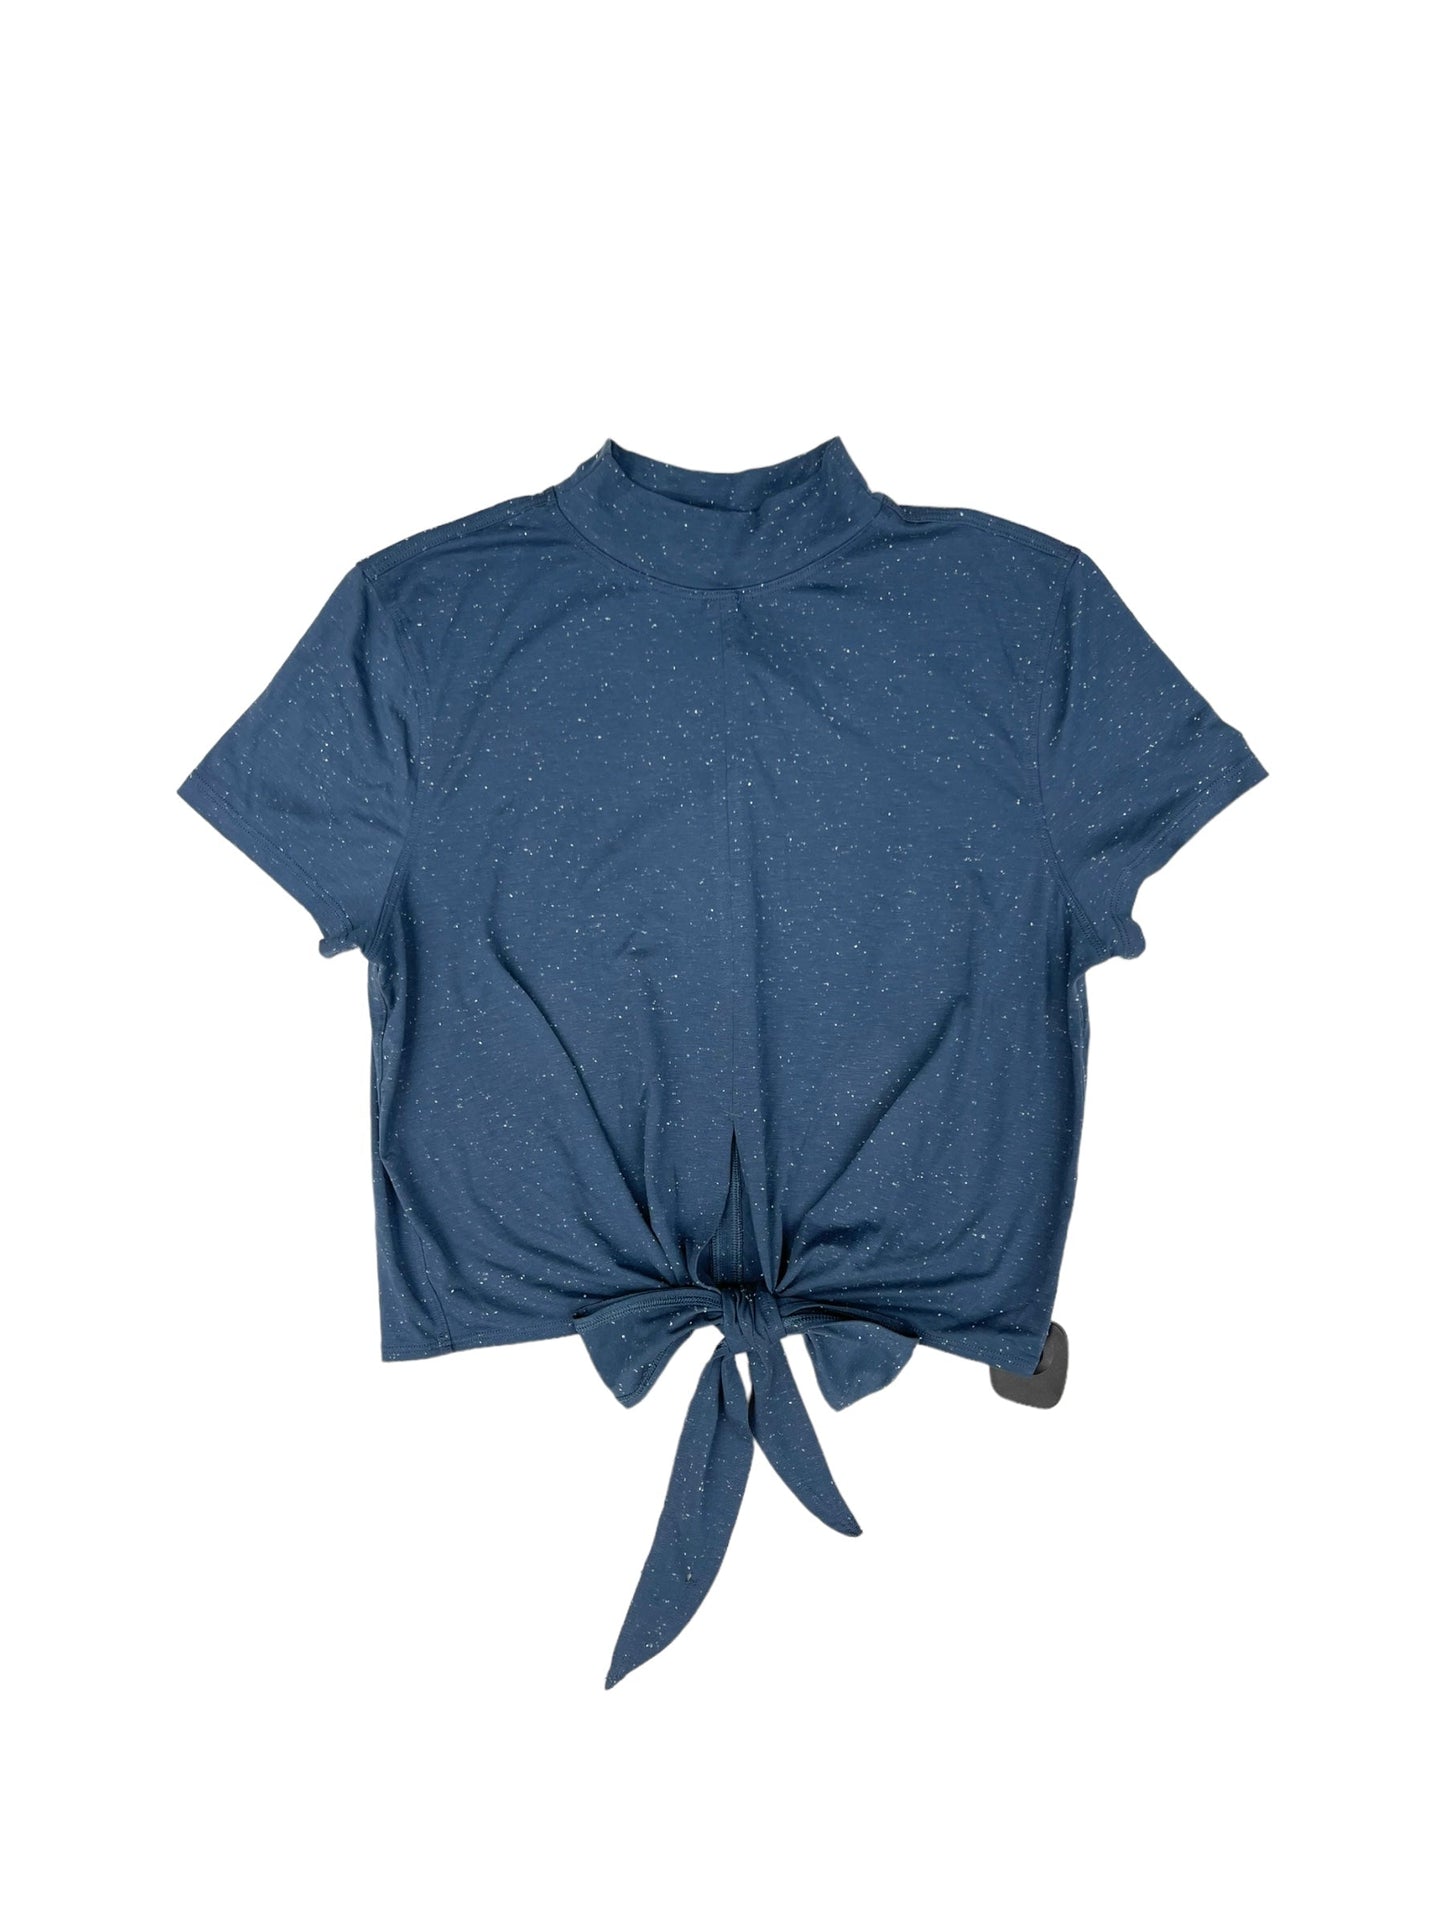 Athletic Top Short Sleeve By Lululemon  Size: 4